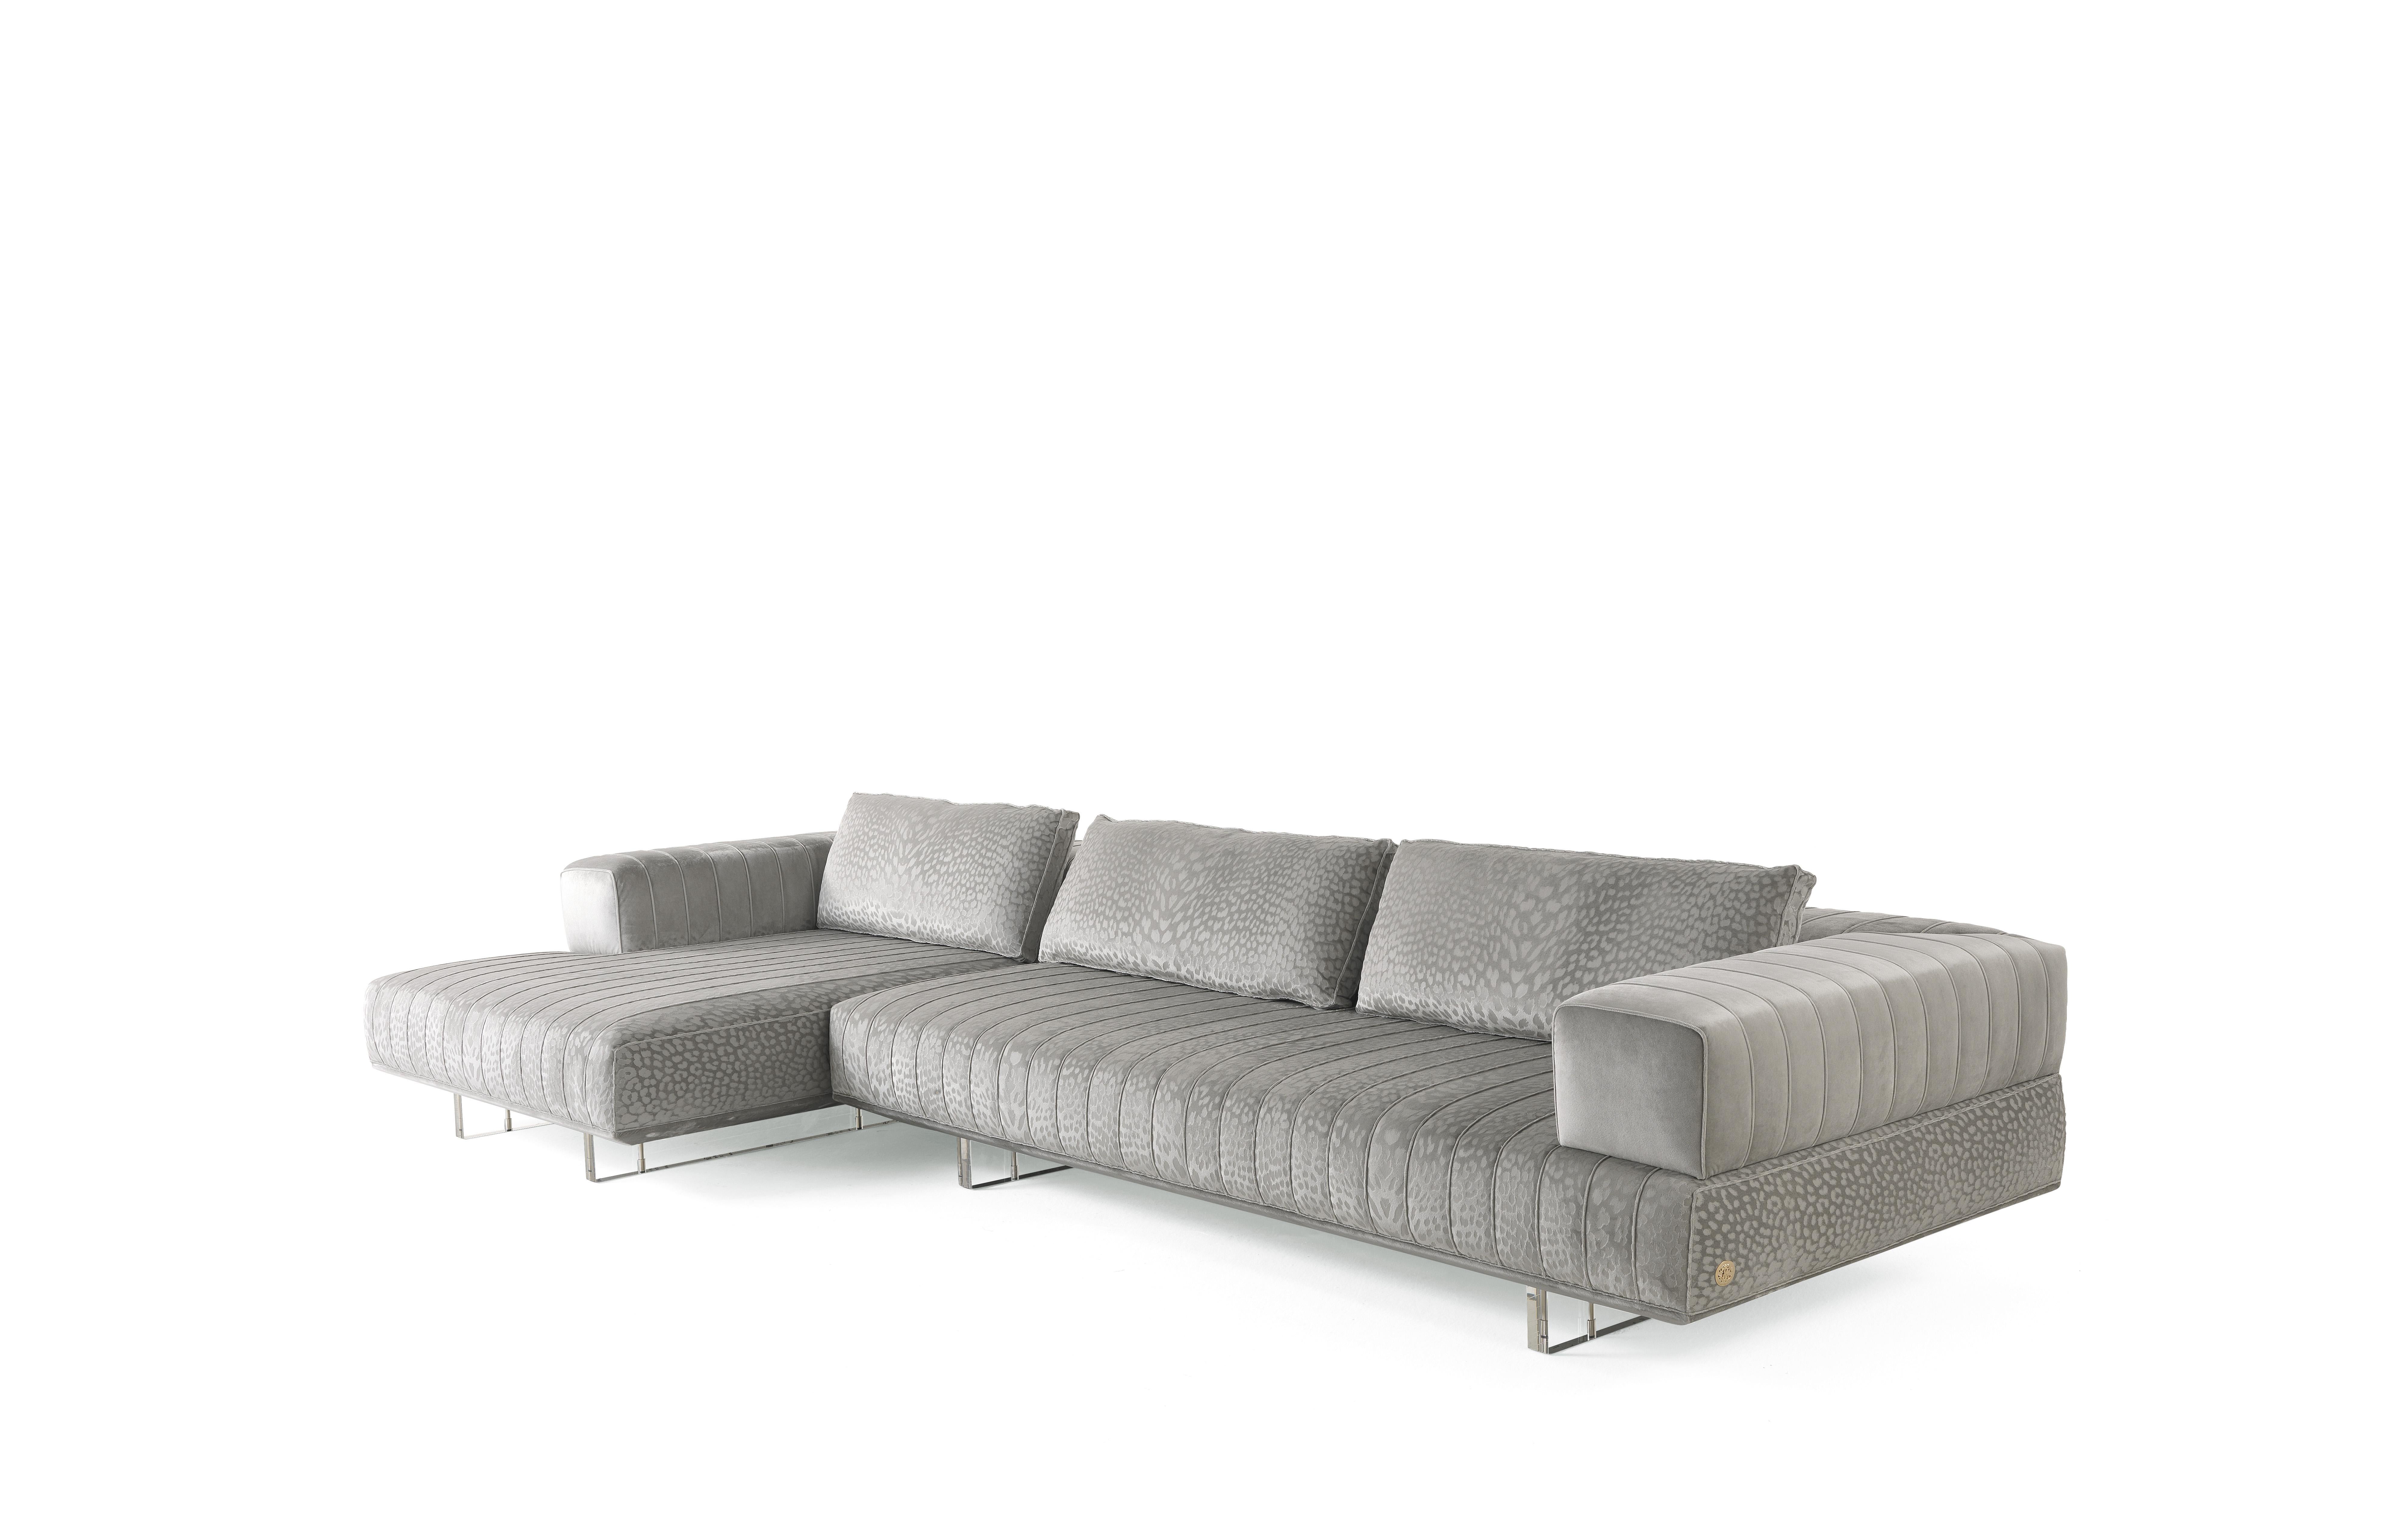 Italian 21st Century Aruba Modular Sofa in Fabric by Roberto Cavalli Home Interiors For Sale